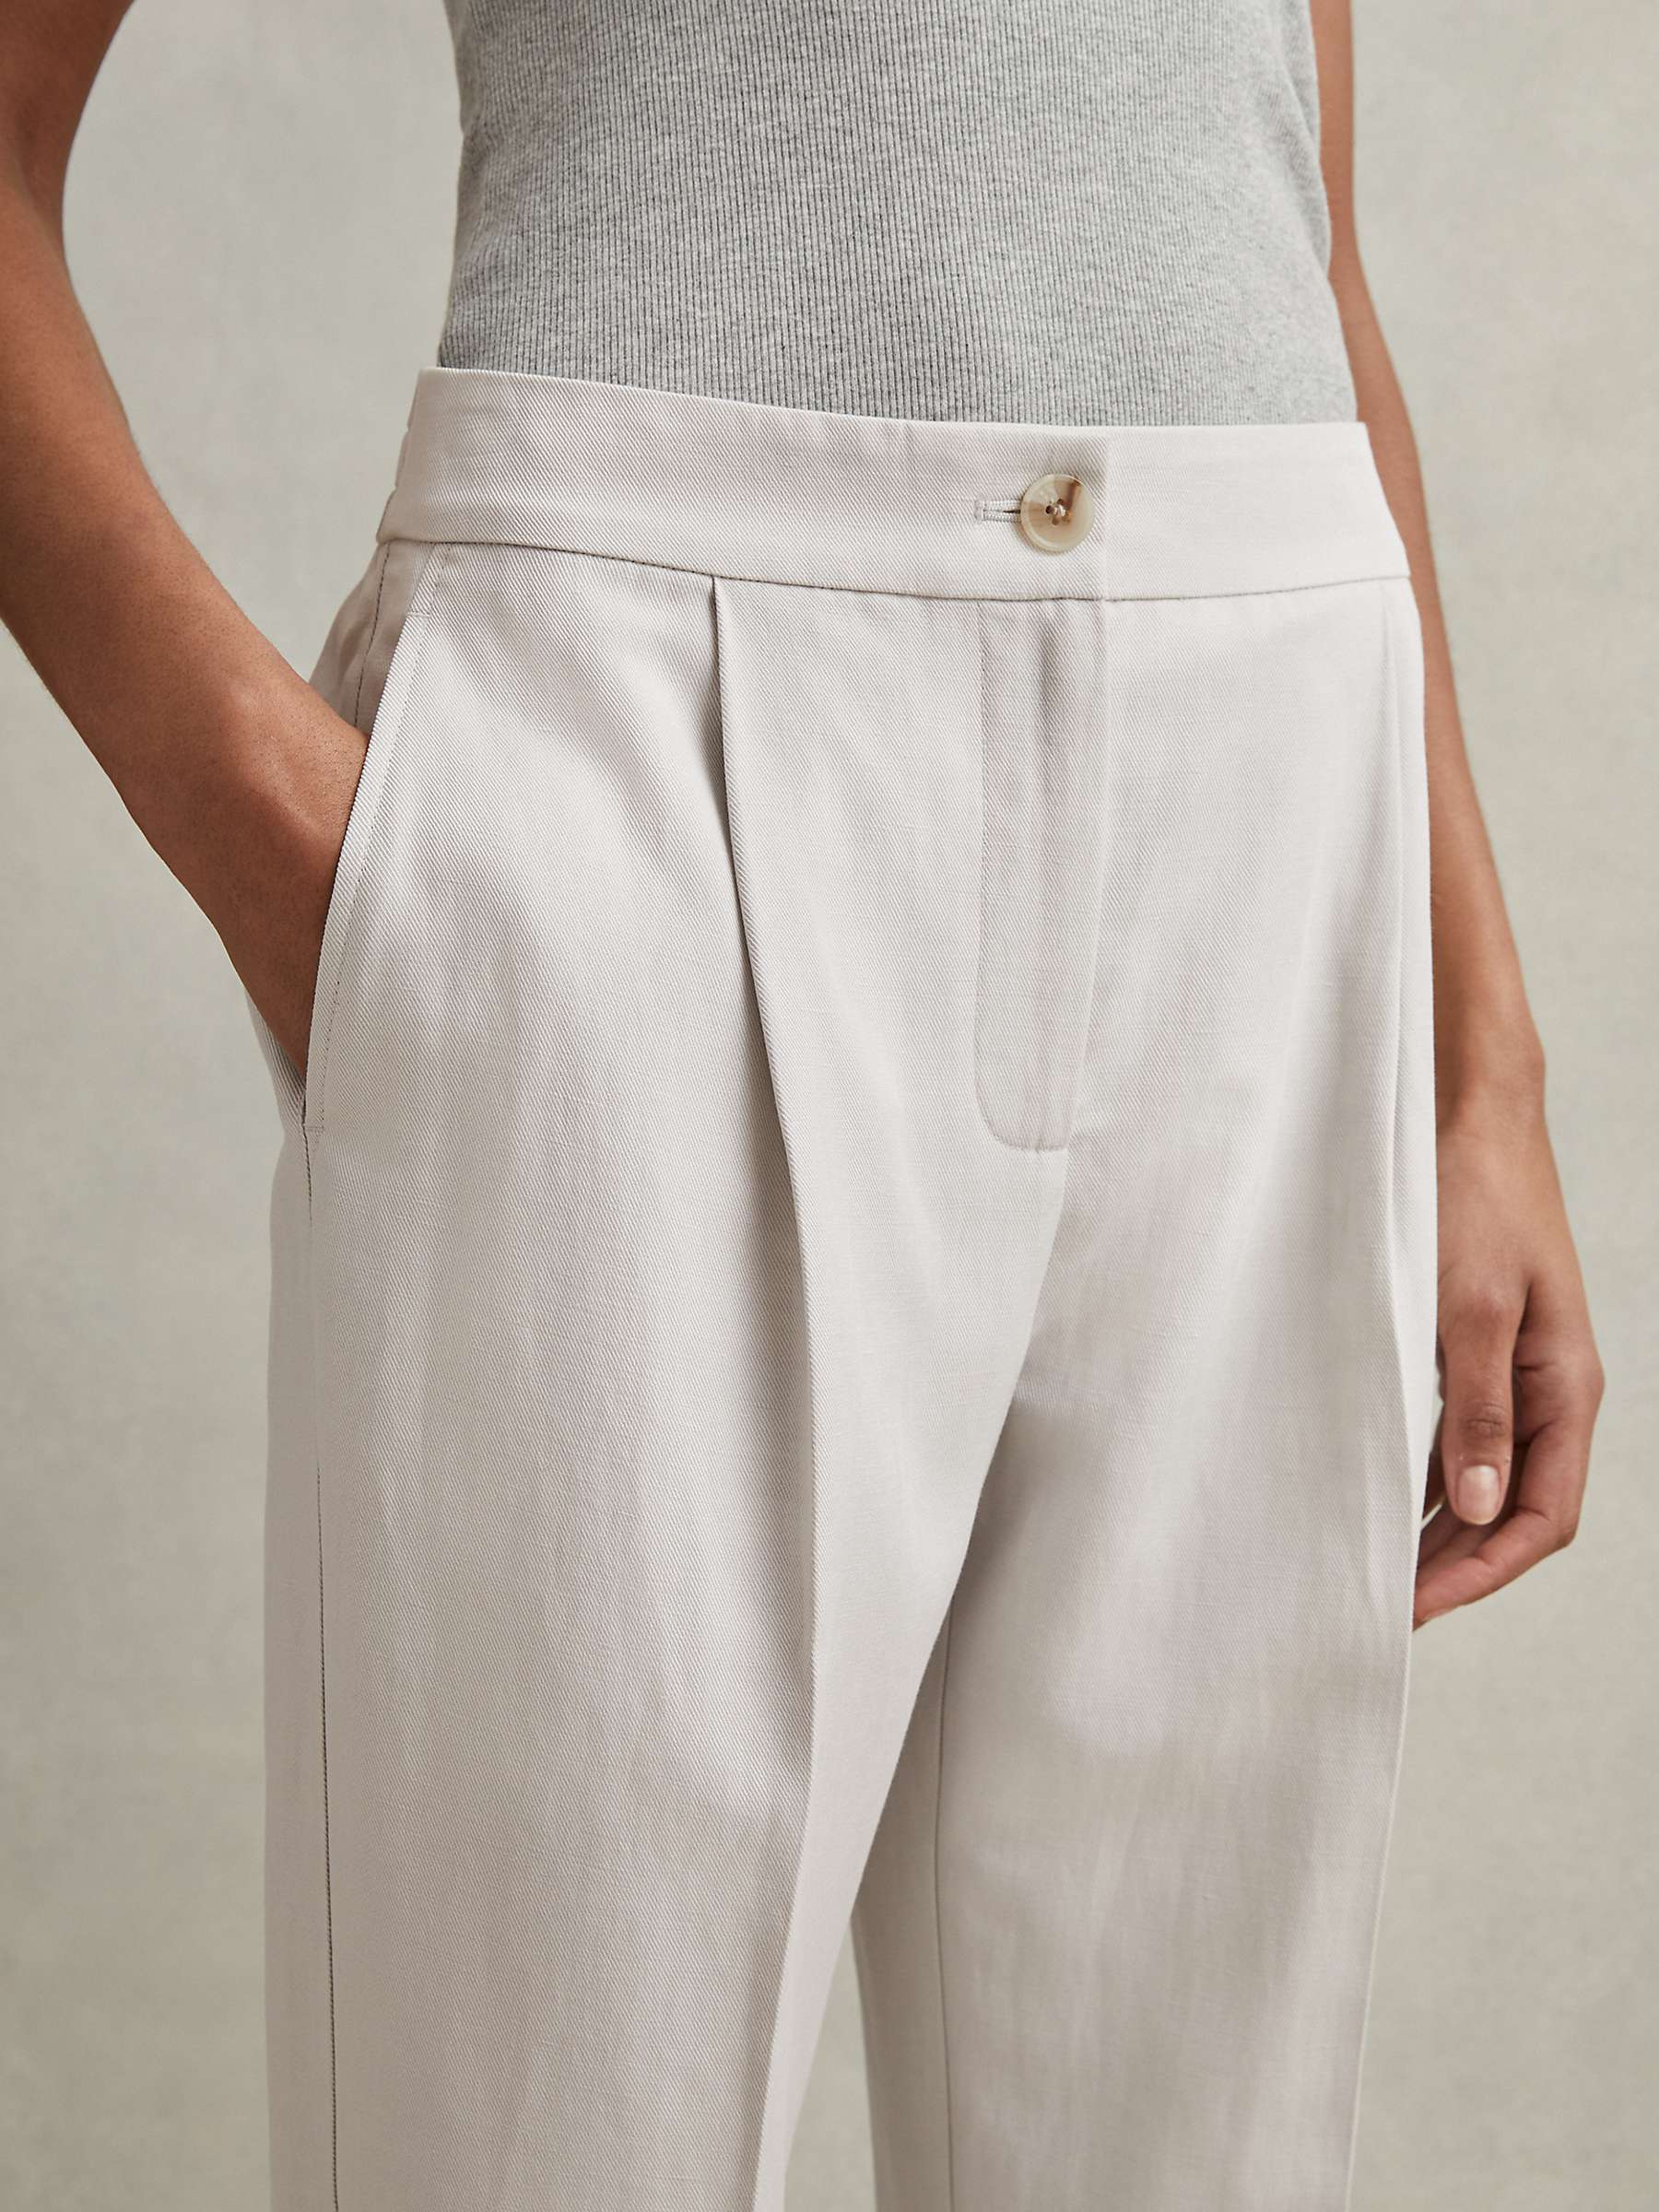 Buy Reiss Farrah Linen Blend Tapered Trousers, Light Grey Online at johnlewis.com